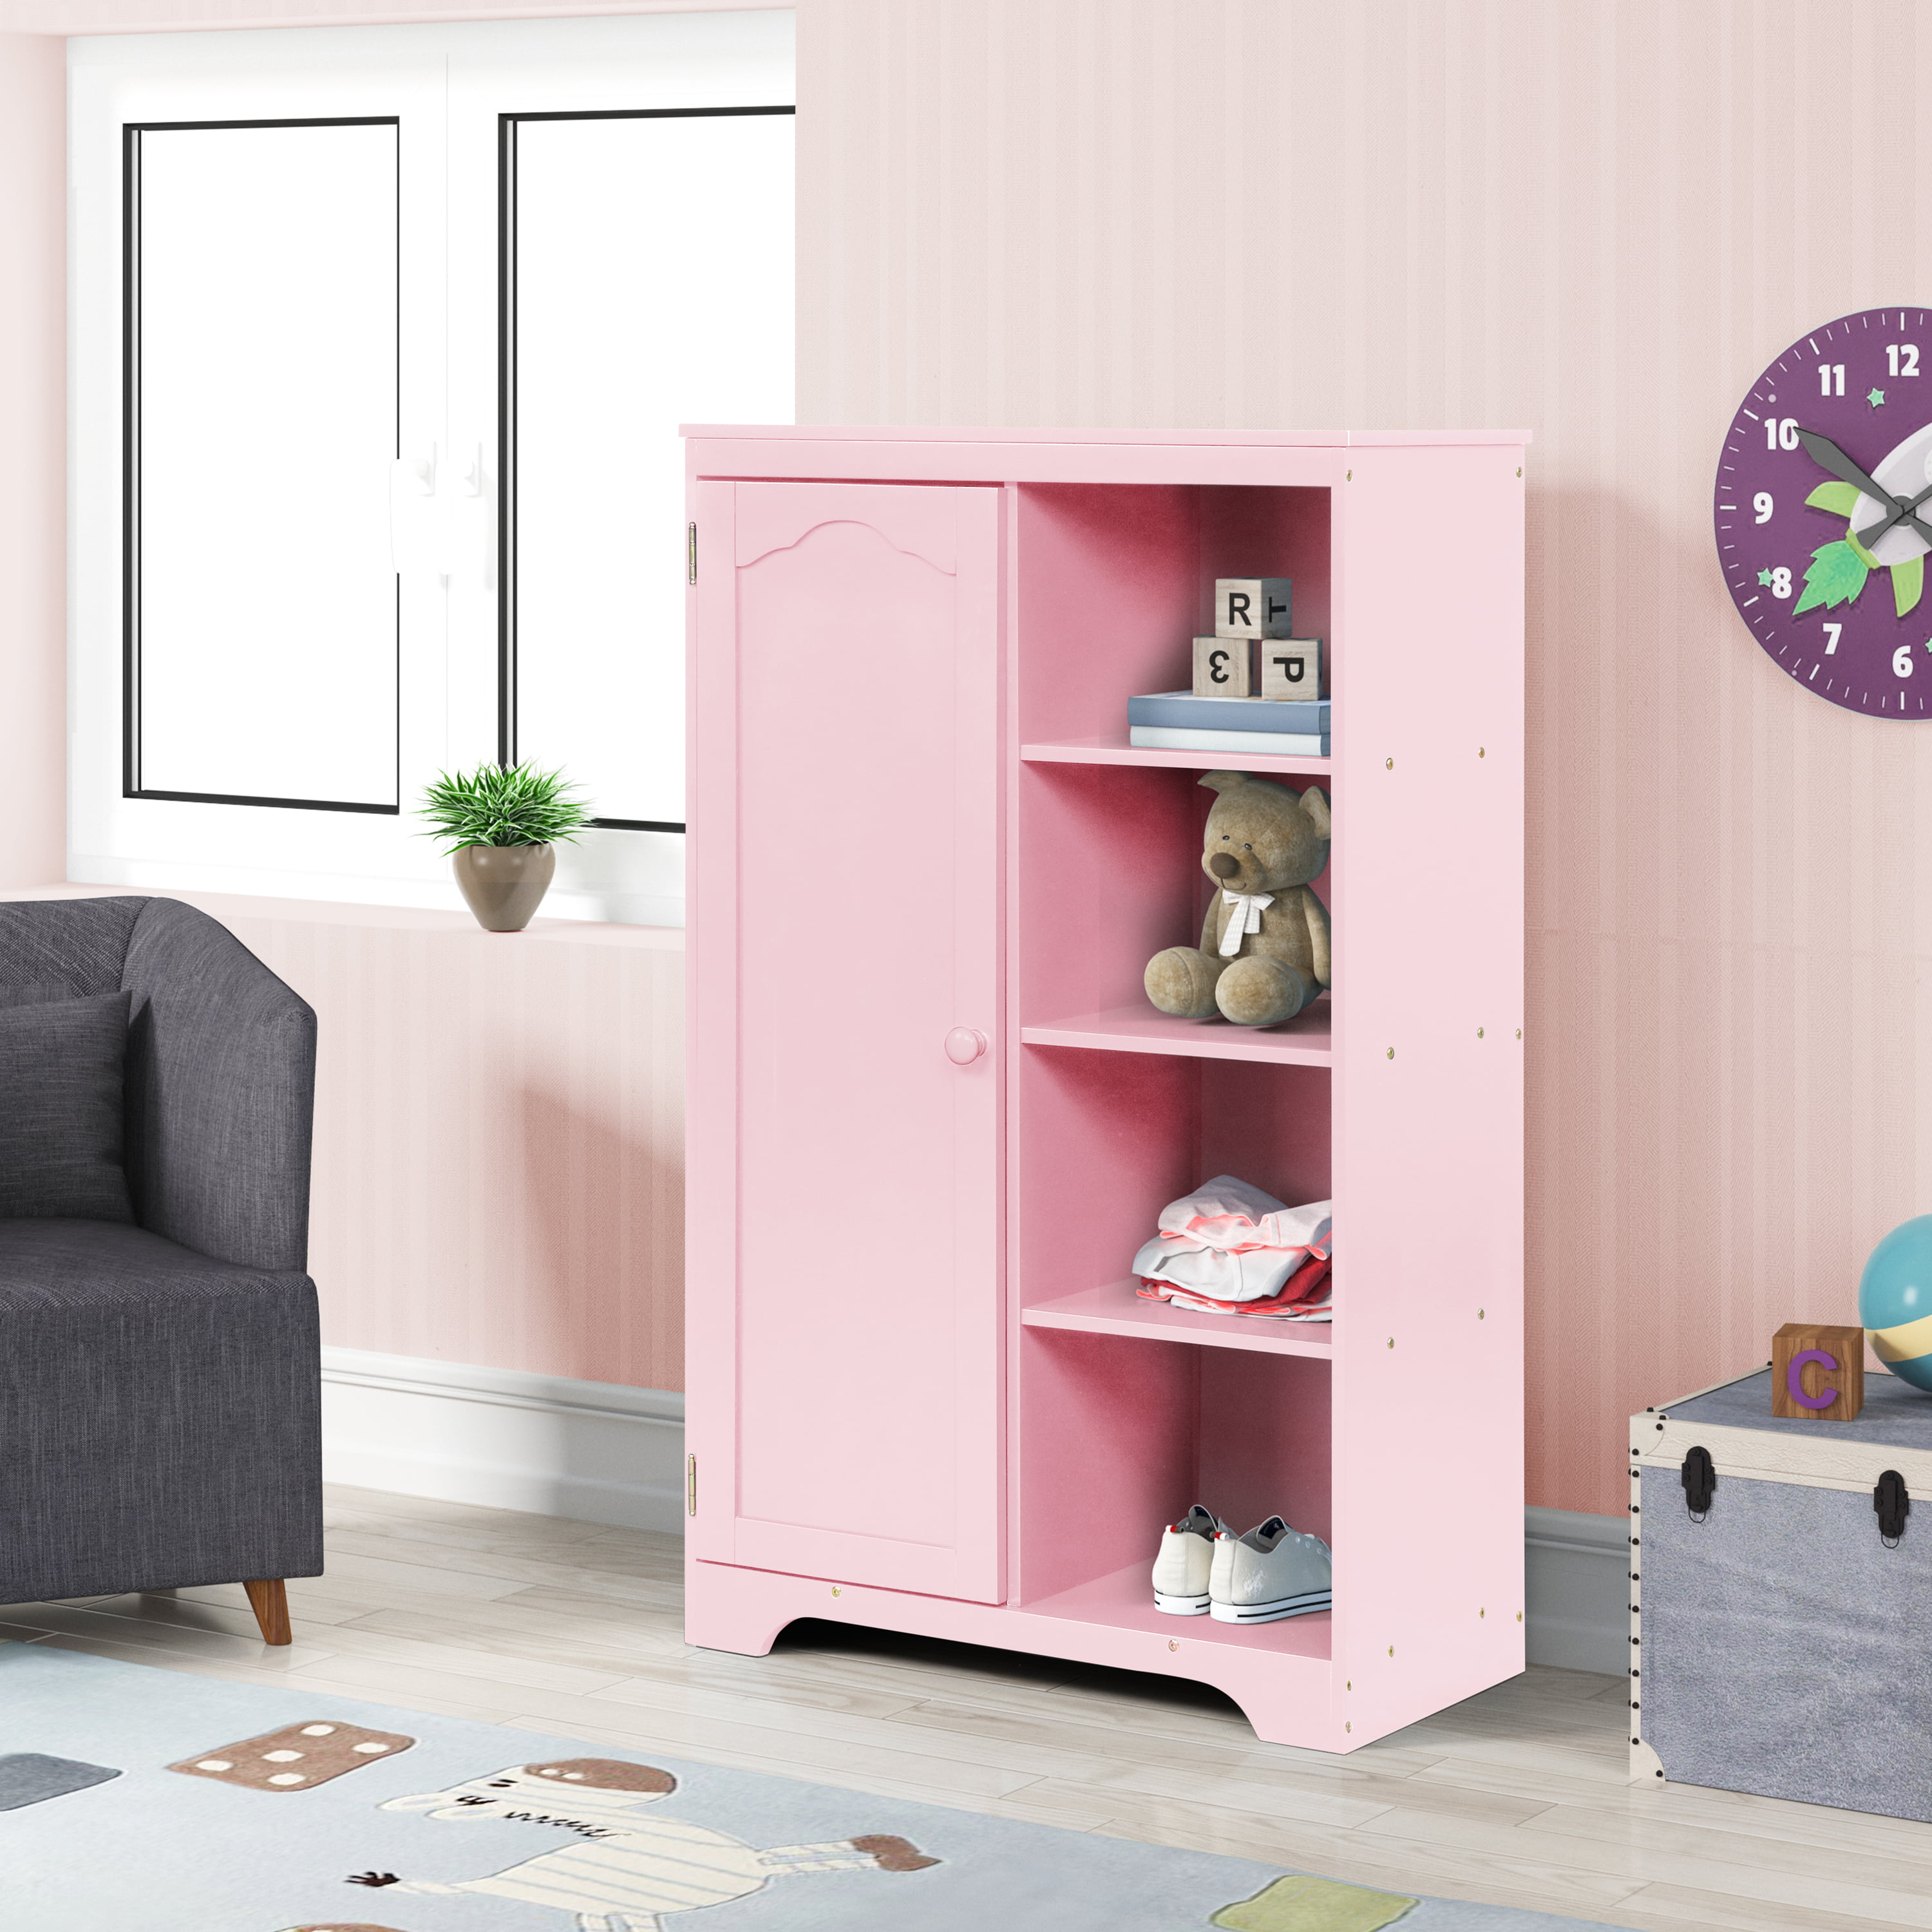  UTEX Kids Armoire Wardrobe Closet with Mirror and Storage Bin,  Pink, 33.4 in W x 15.75 in D x 44.5 in H : Home & Kitchen